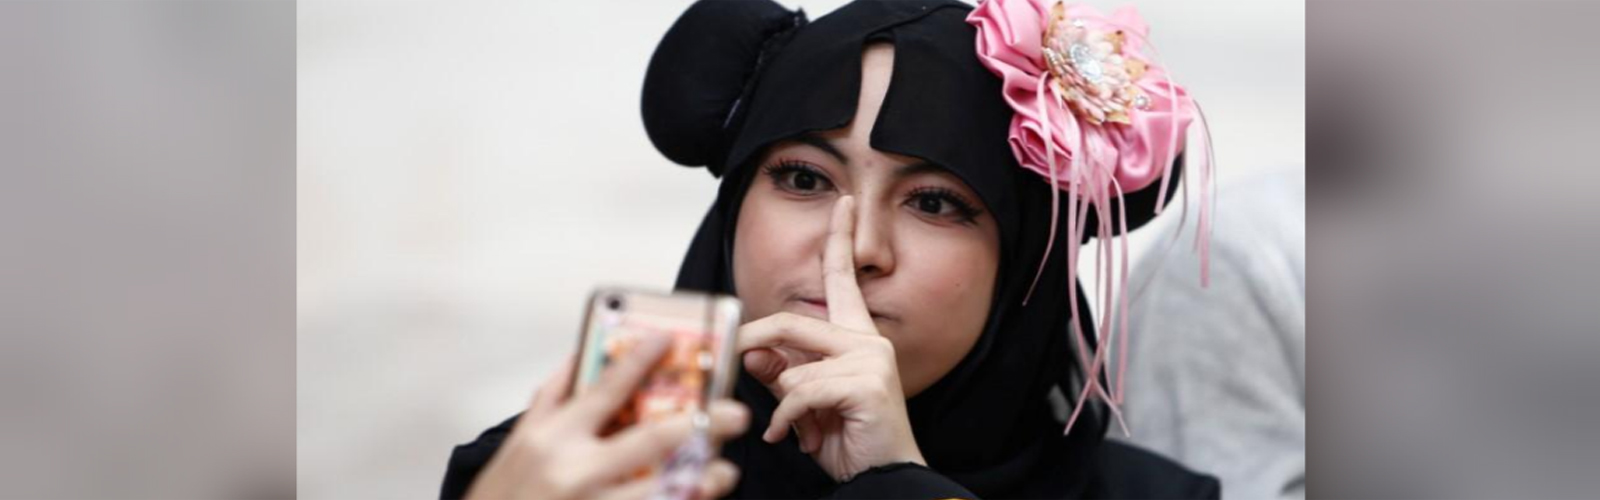 Hijab cosplay takes off as Muslim women embrace fan culture